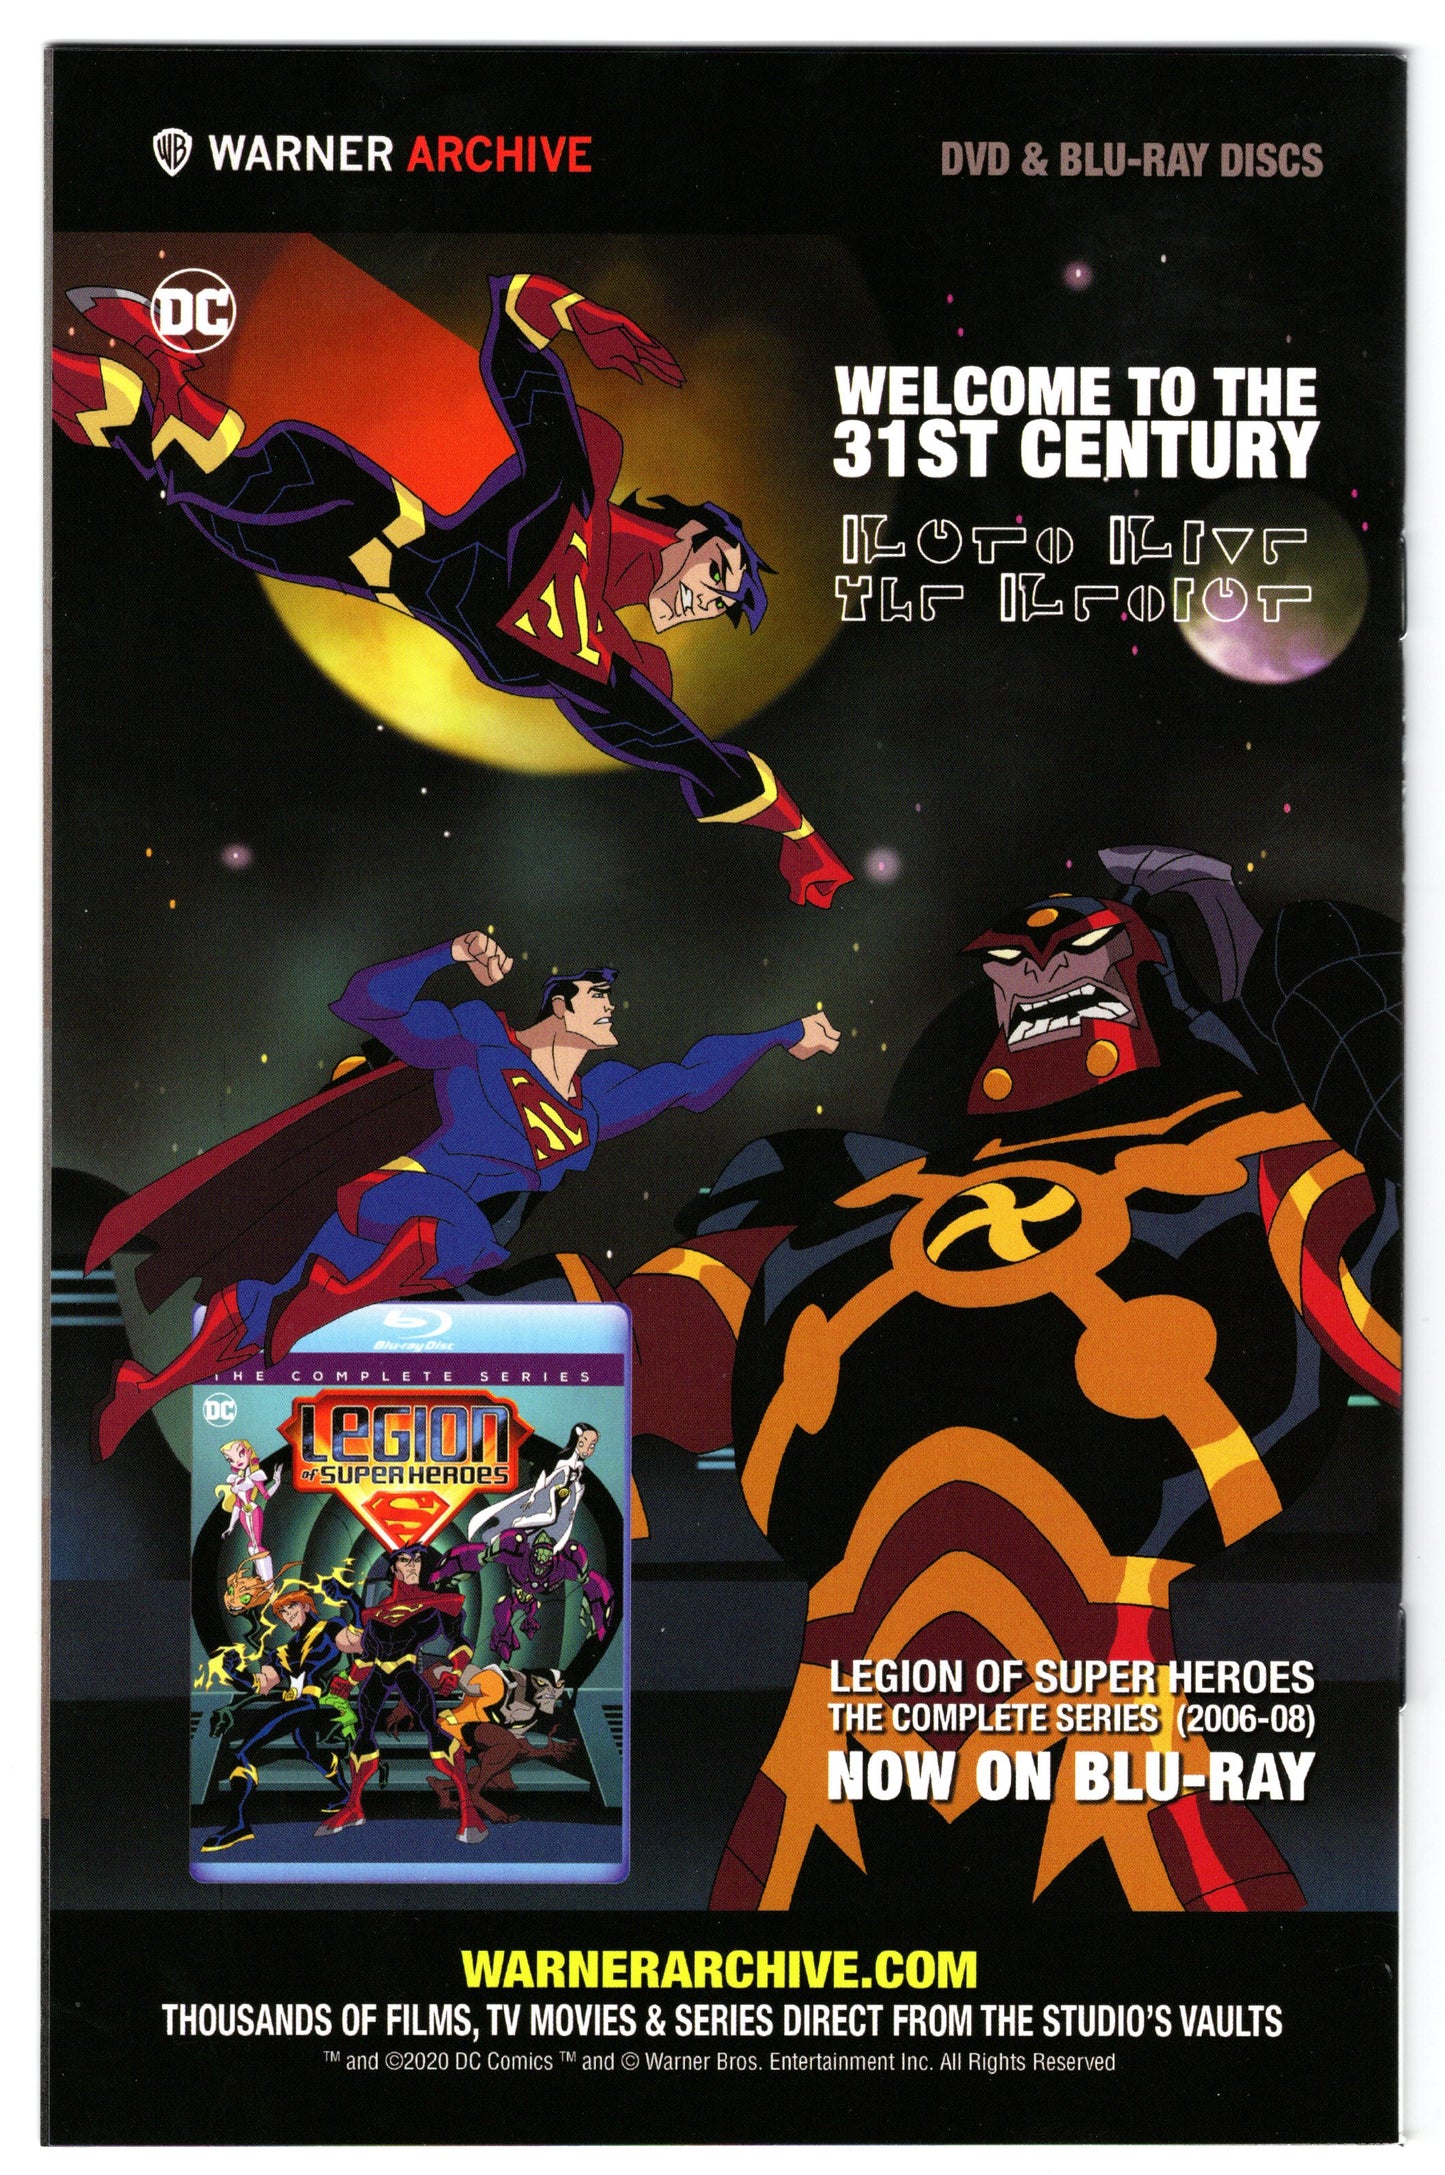 Detective Comics #1025 "Variant Cover" (Oct. 2020 - Marvel) NM